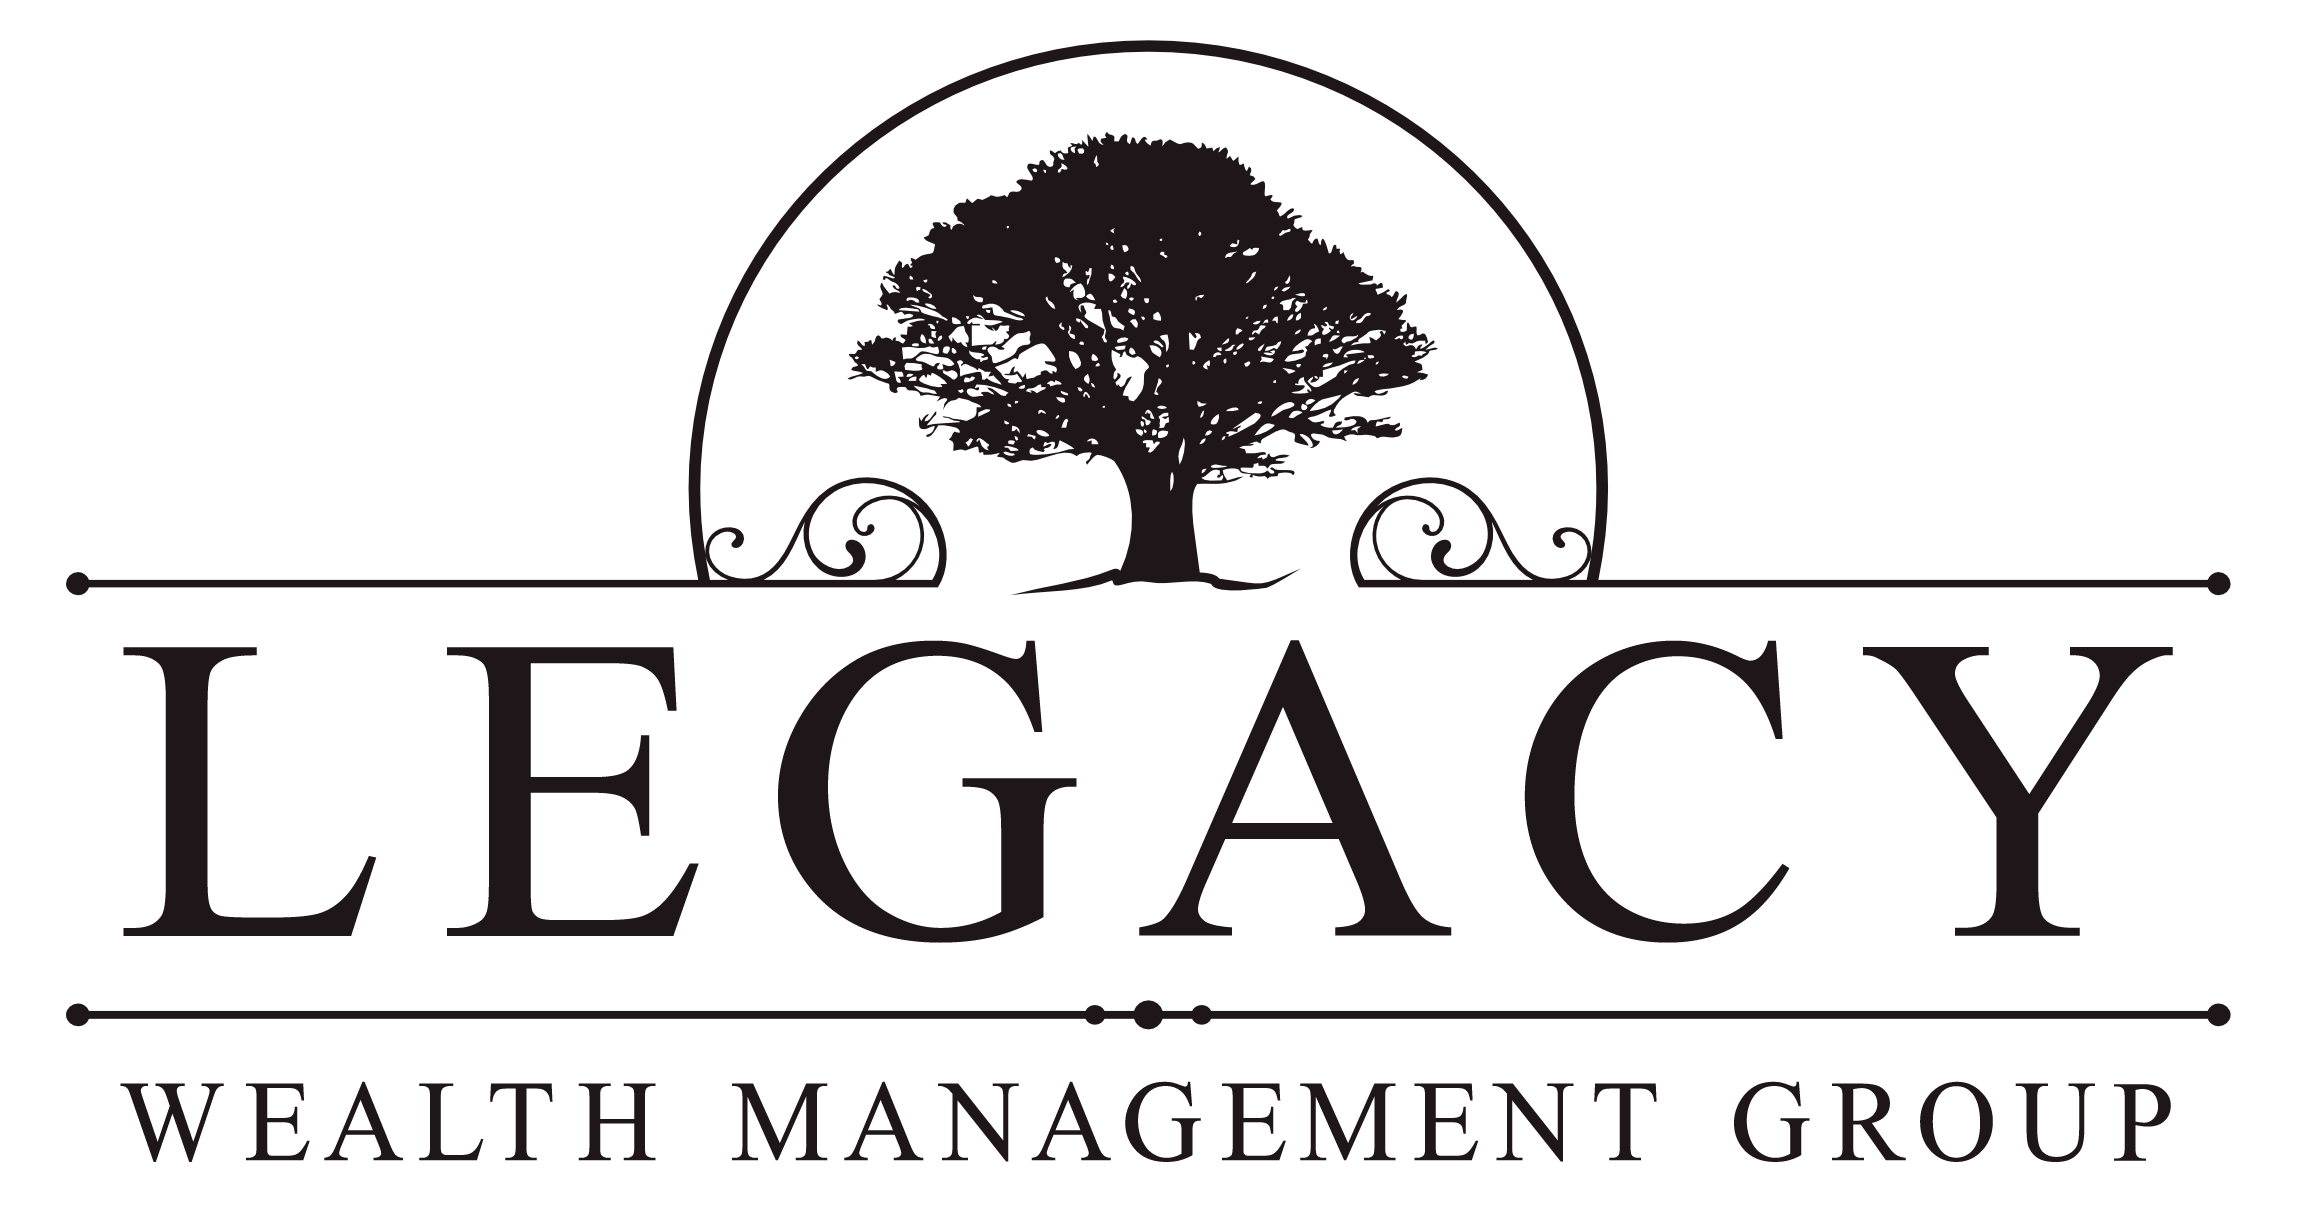 Legacy Management Group Logo png-01.png